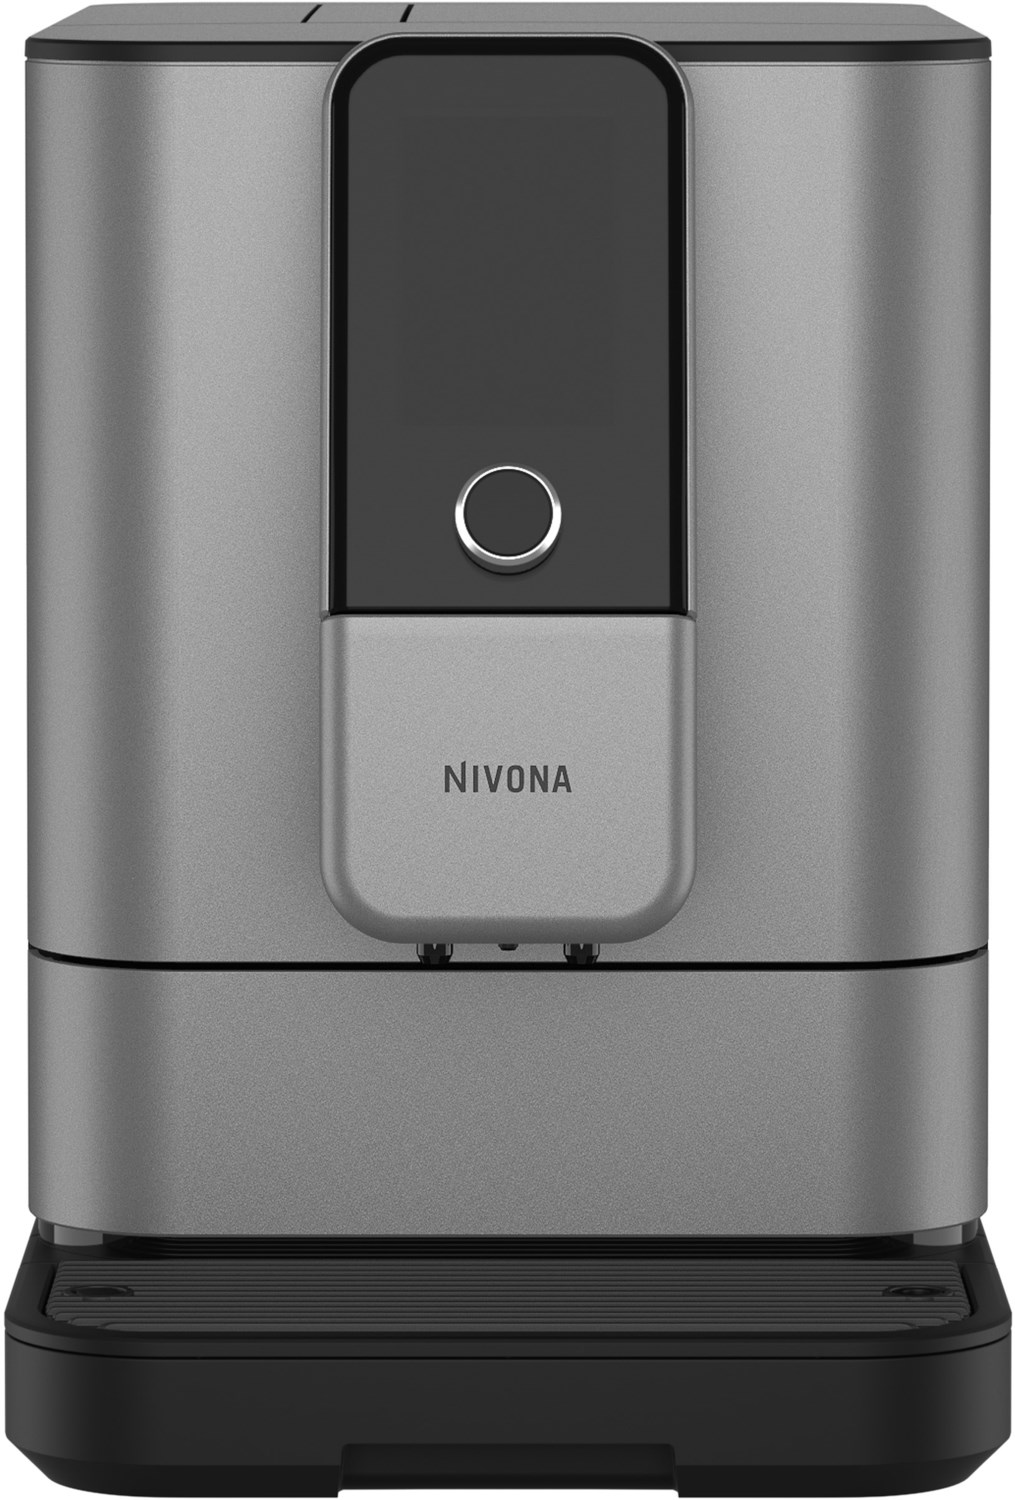 Nivona Kaffeevollautomat NIVO 8103 Titan // 1kg Nivona Kaffee gratis